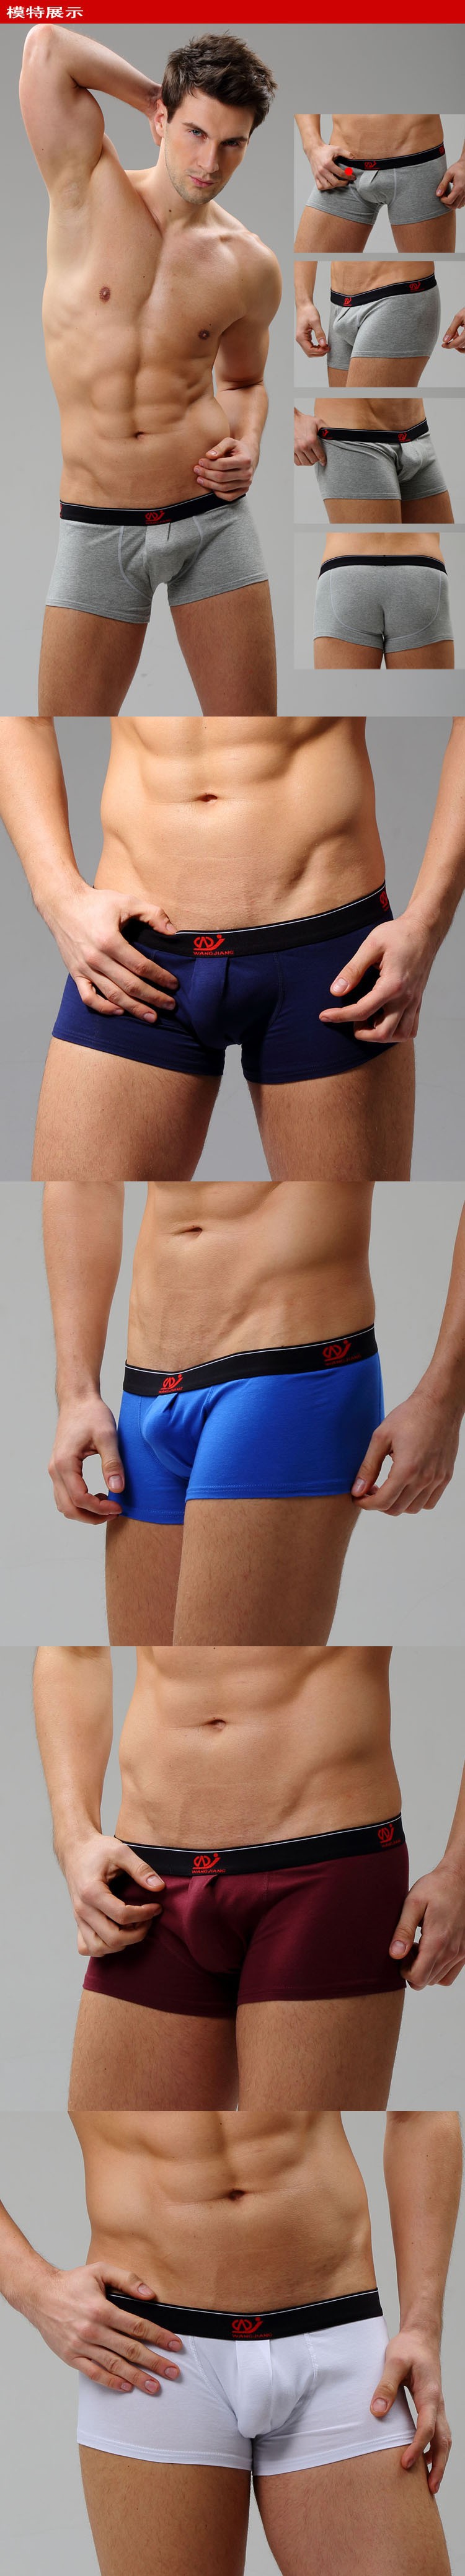 Manocean underwear men MultiColors sexy casual U convex design low-rise cotton solid boxers boxer shorts 7342 (30)